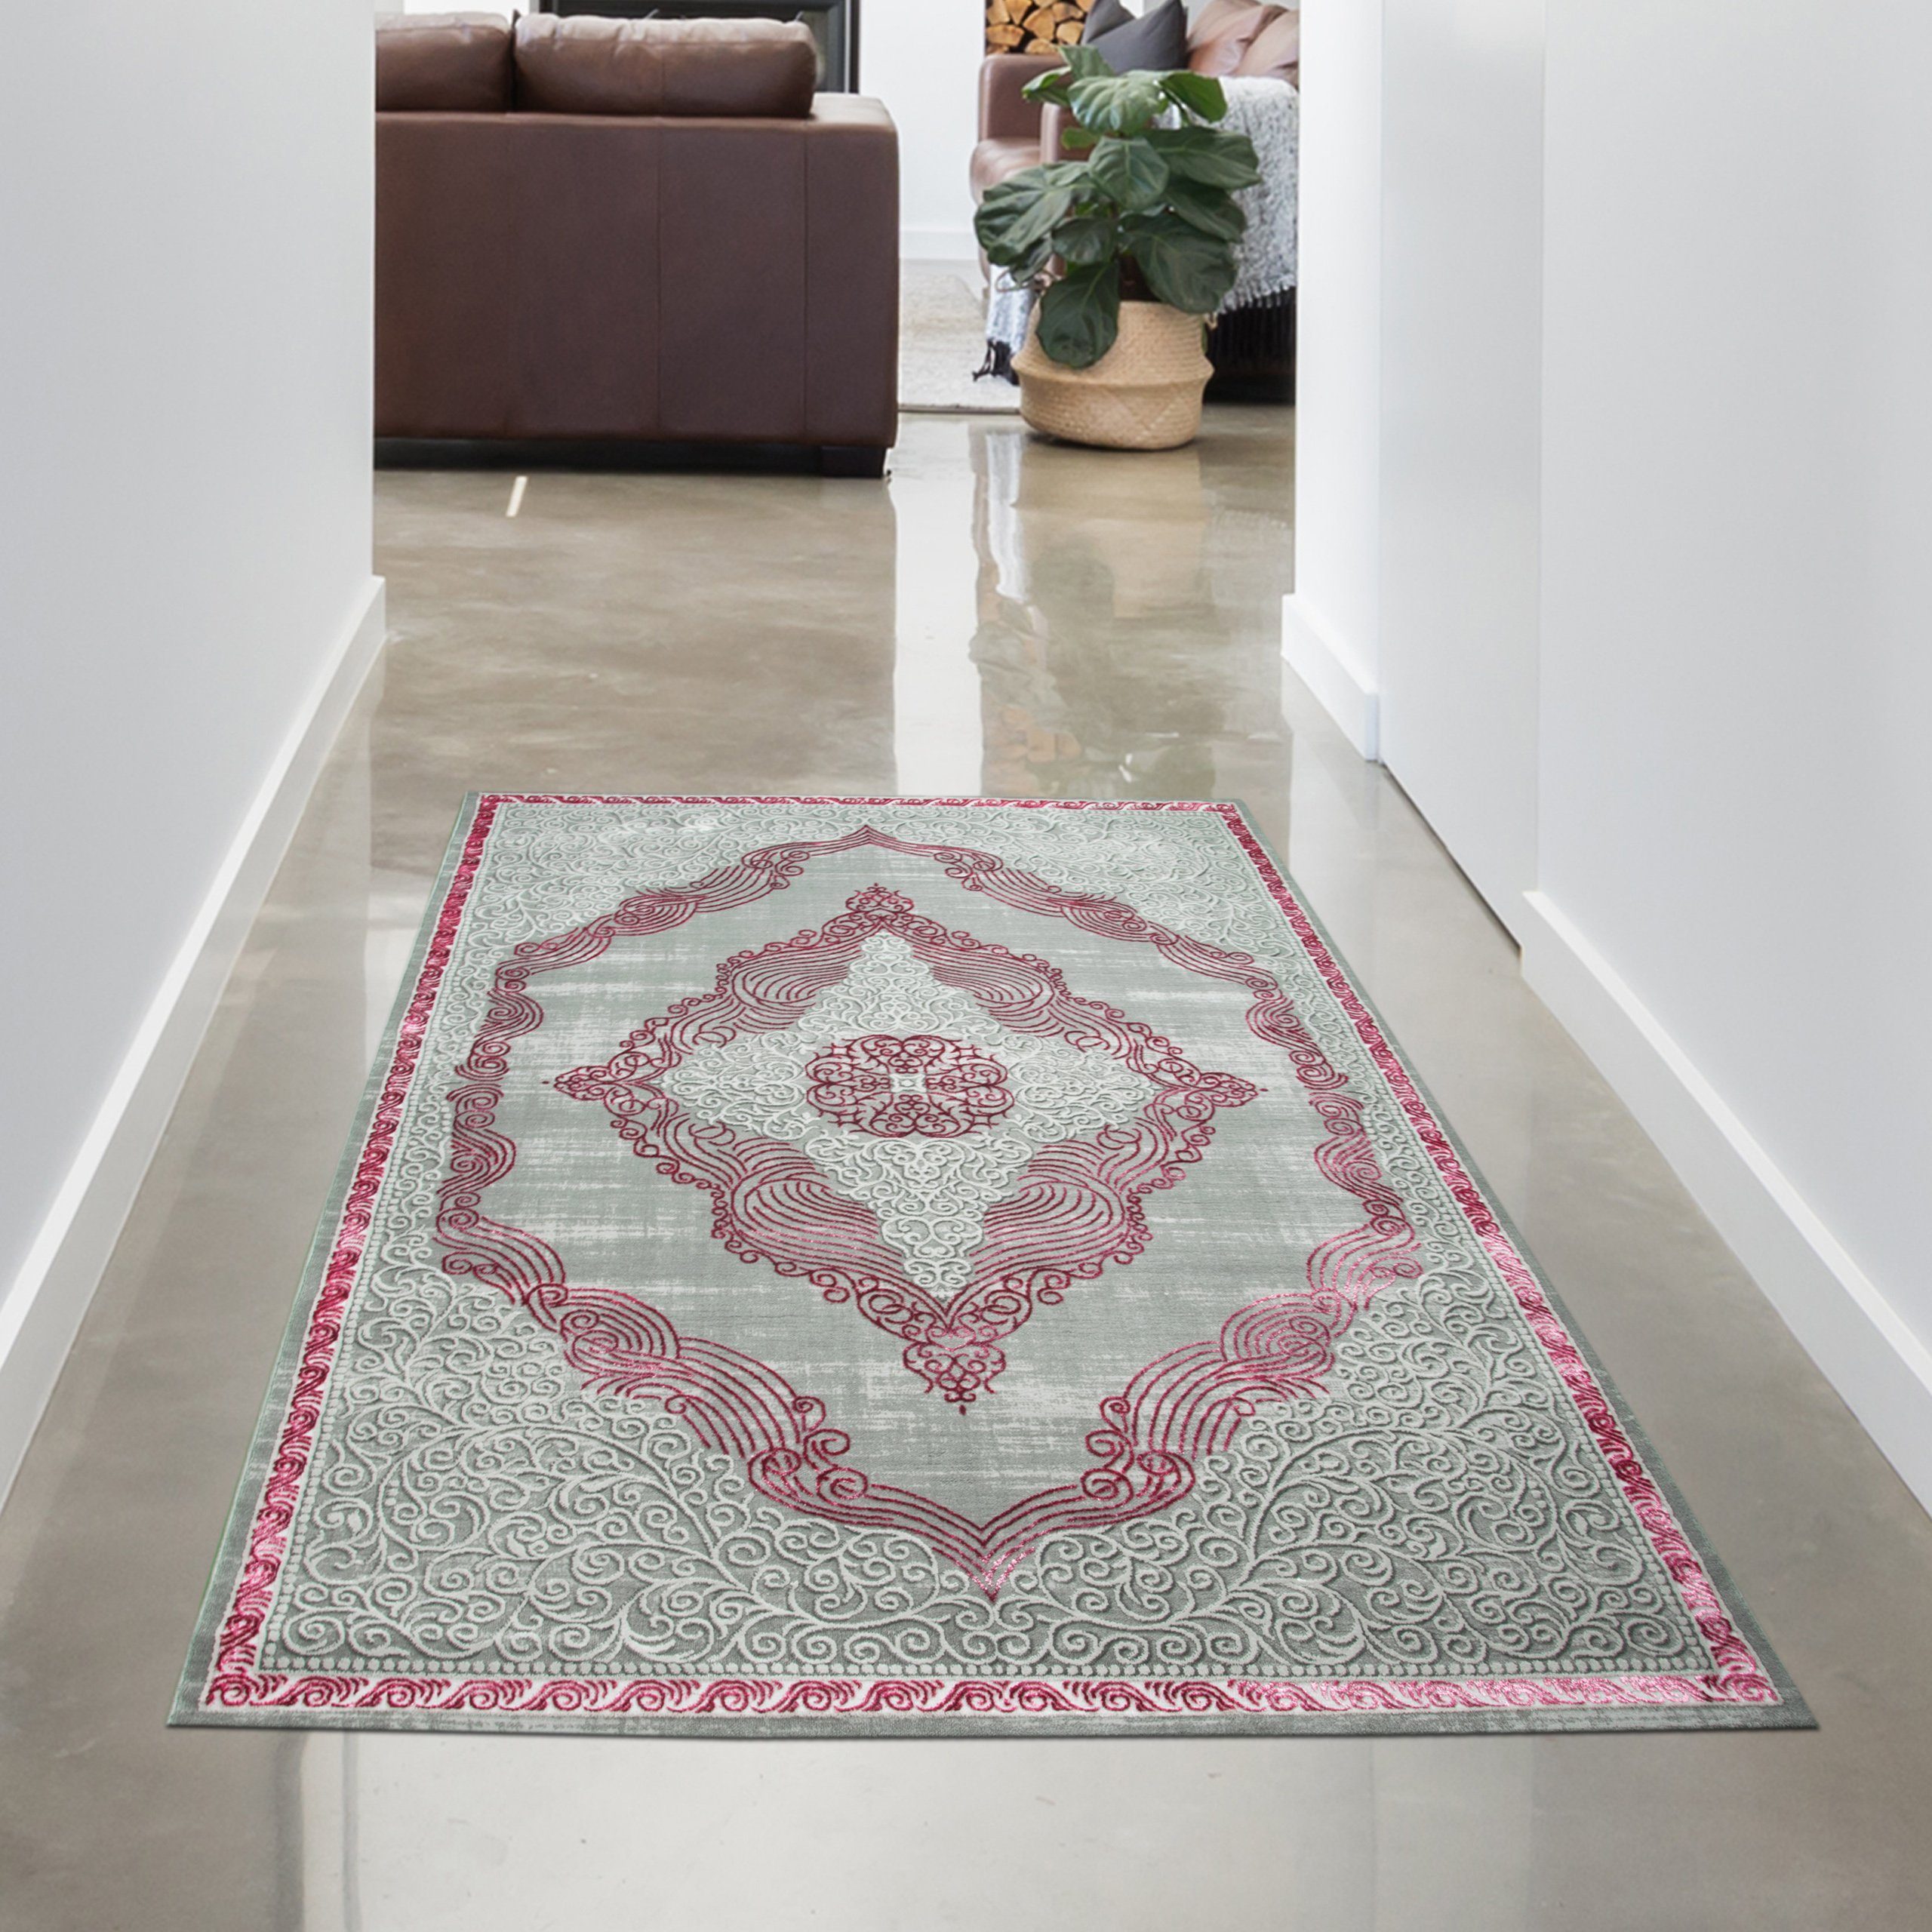 Teppich Orientteppich • glänzend rosa verzierte Bordüre • grau, Carpetia, rechteckig, Höhe: 12 mm, Fußbodenheizungs-geeignet, Schmutzabweisend, Allergiker-geeignet